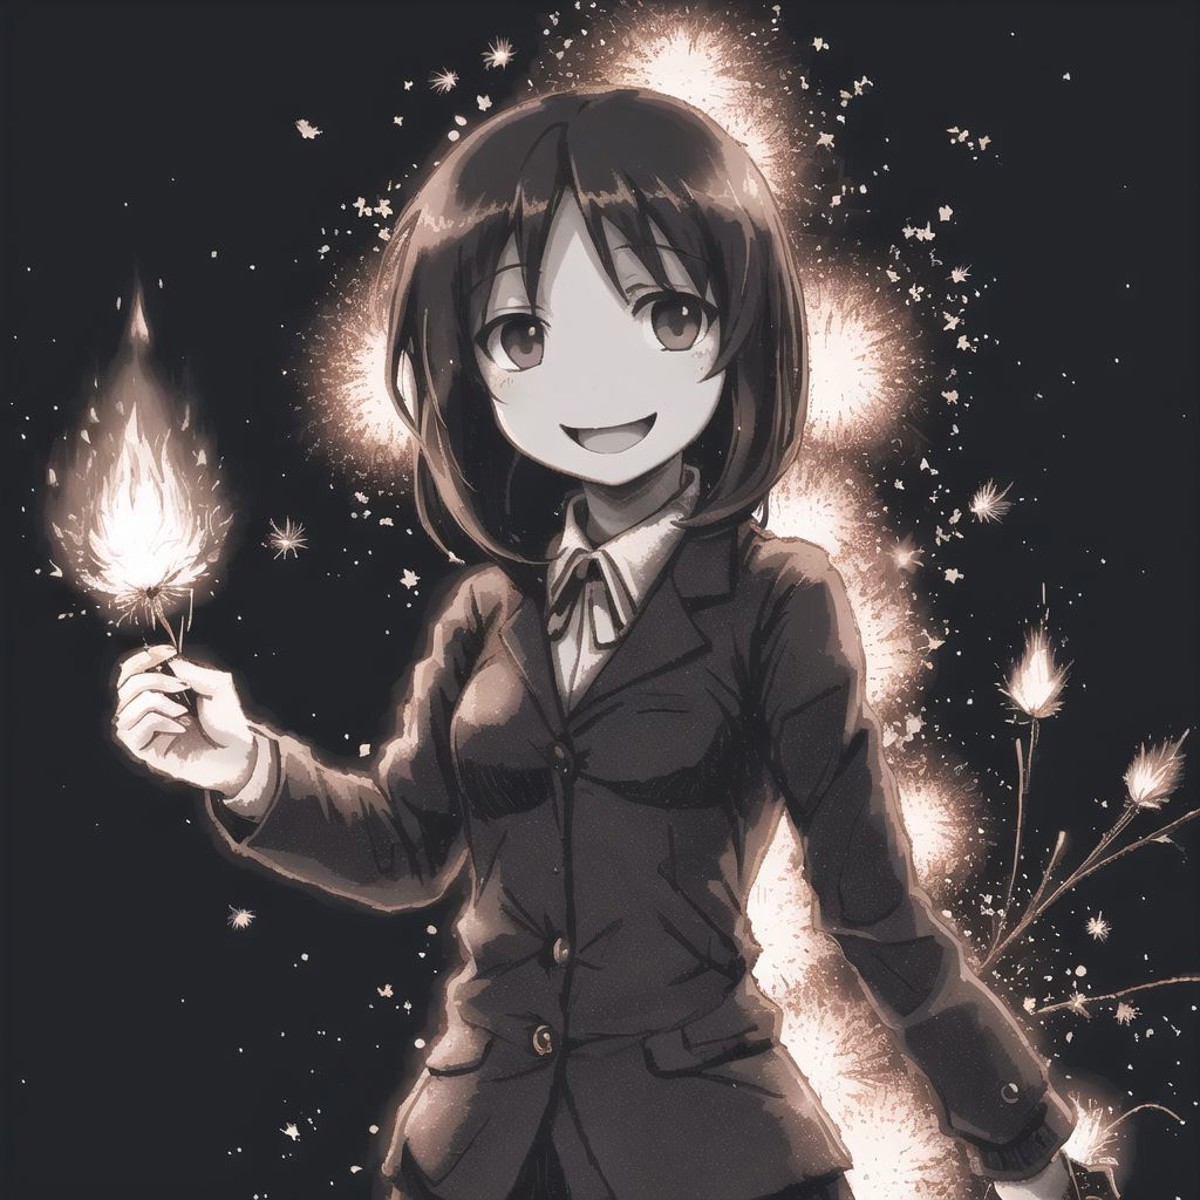 <lora:ham_rifl:0.8>, monochrome, oekaki, 

above waist portrait beautiful cute anime young woman, Fiery firework ignites b...